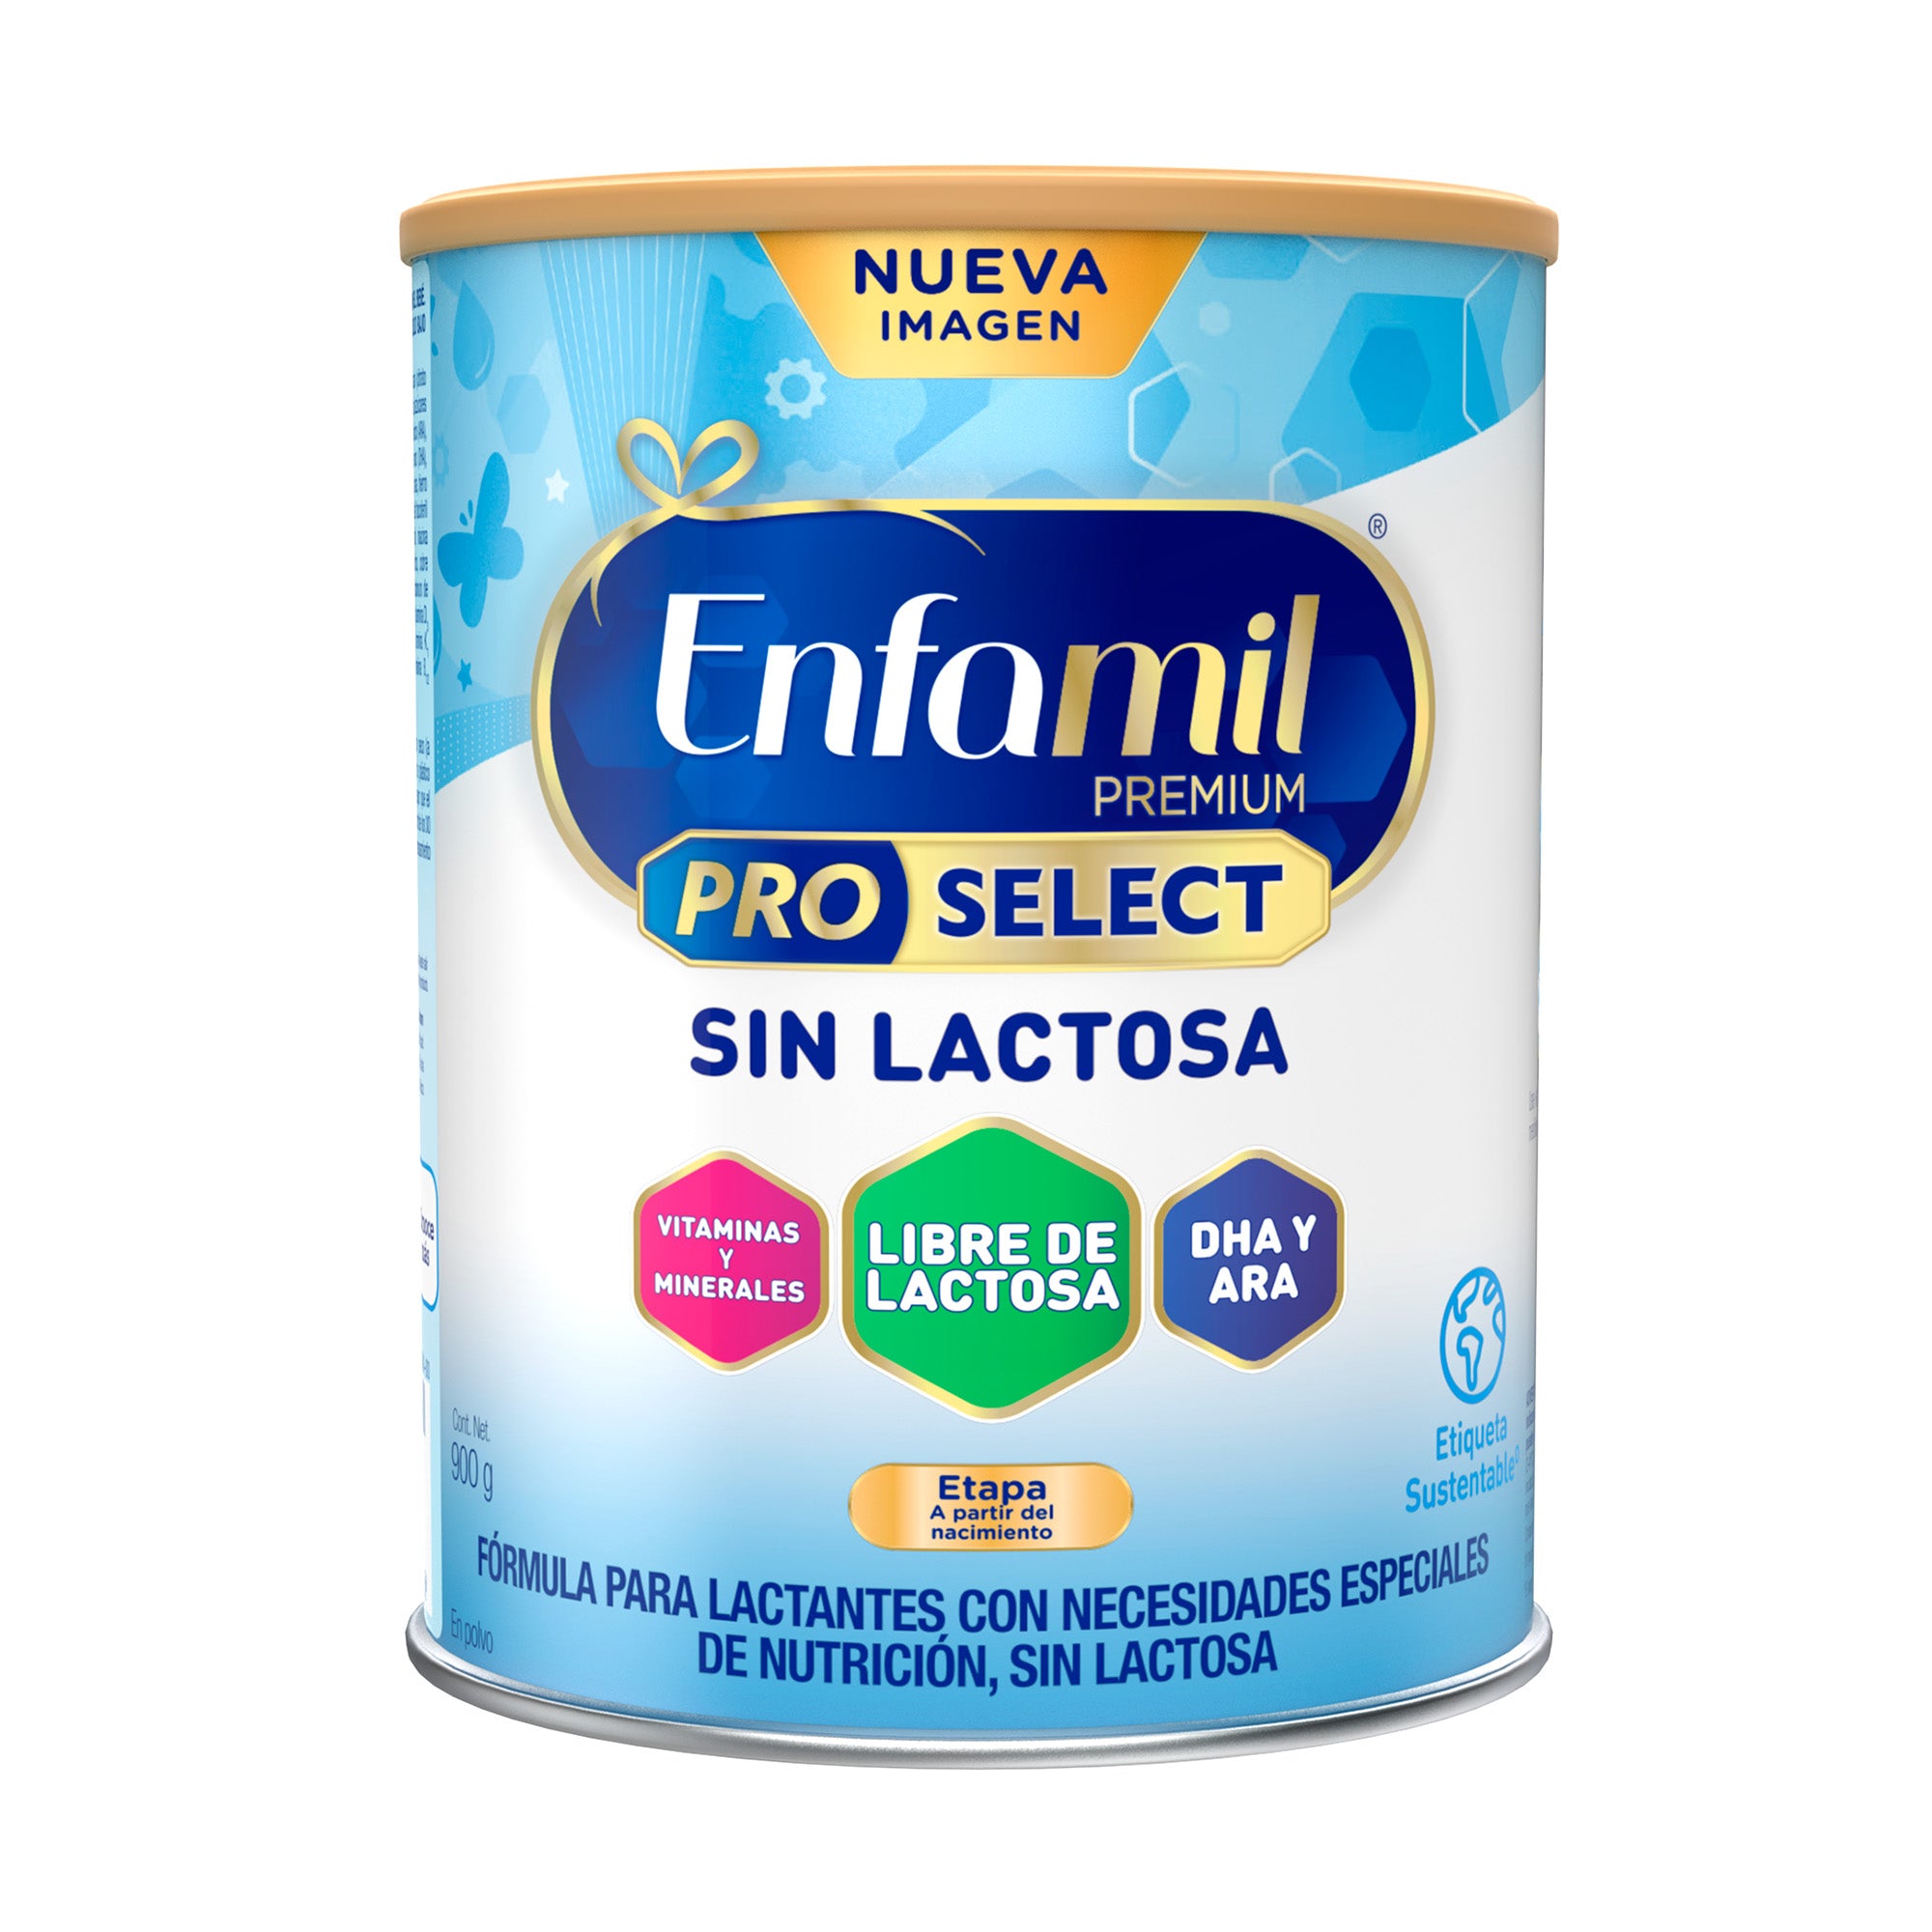 Enfamil® Premium ProSelect Sin Lactosa, Lata de 900 grs.